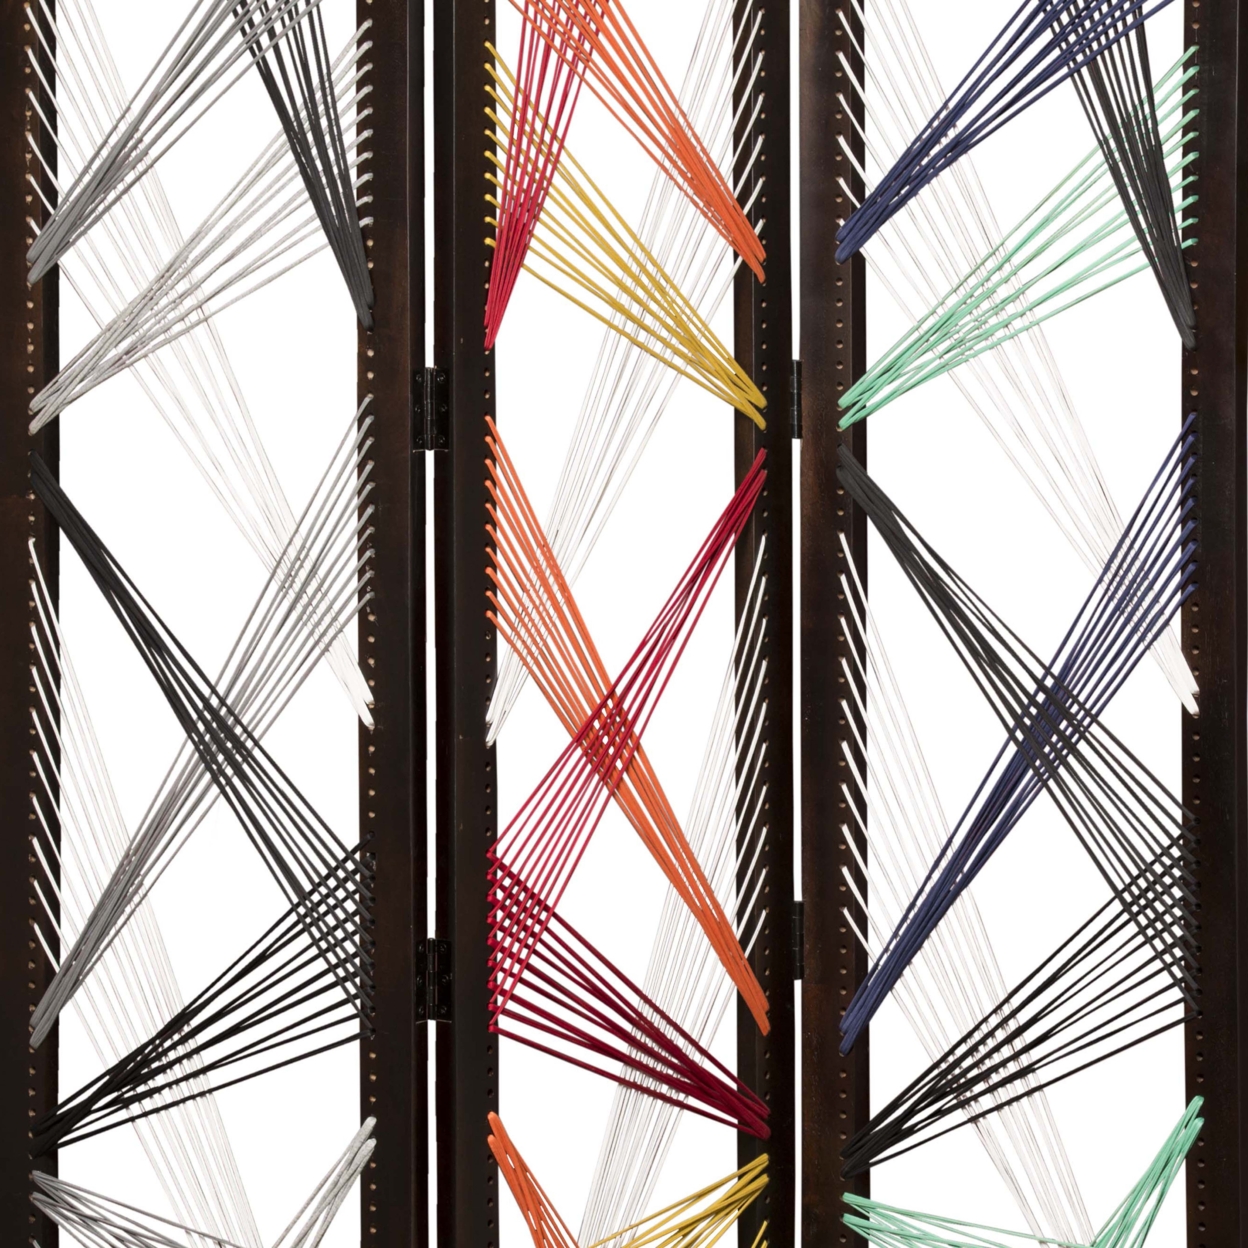 Contemporary 3 Panel Wooden Screen With Woven String Design, Multicolor- Saltoro Sherpi